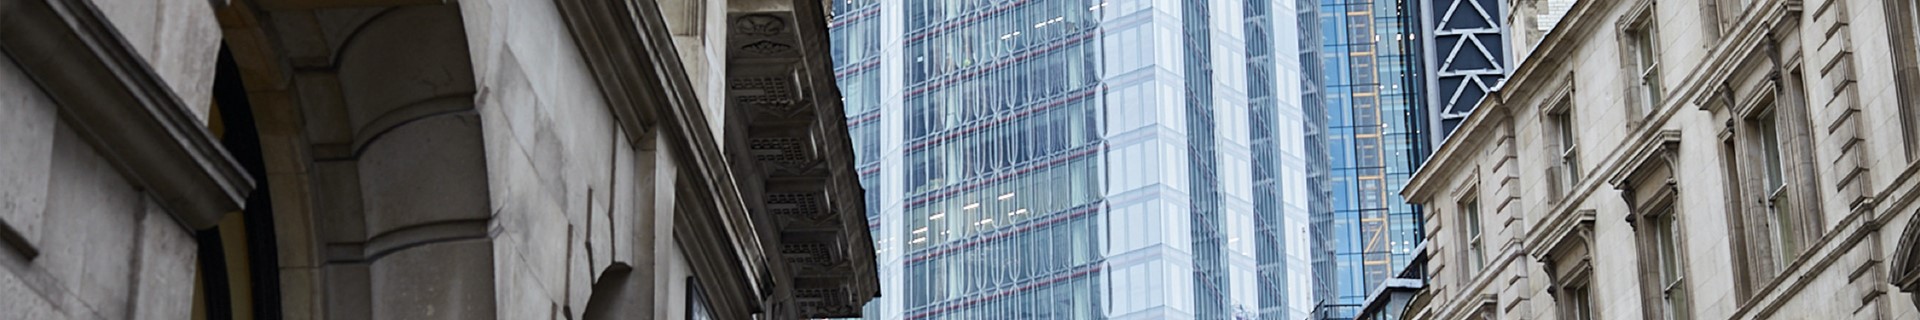 SF Detail Of London Buildings A1446